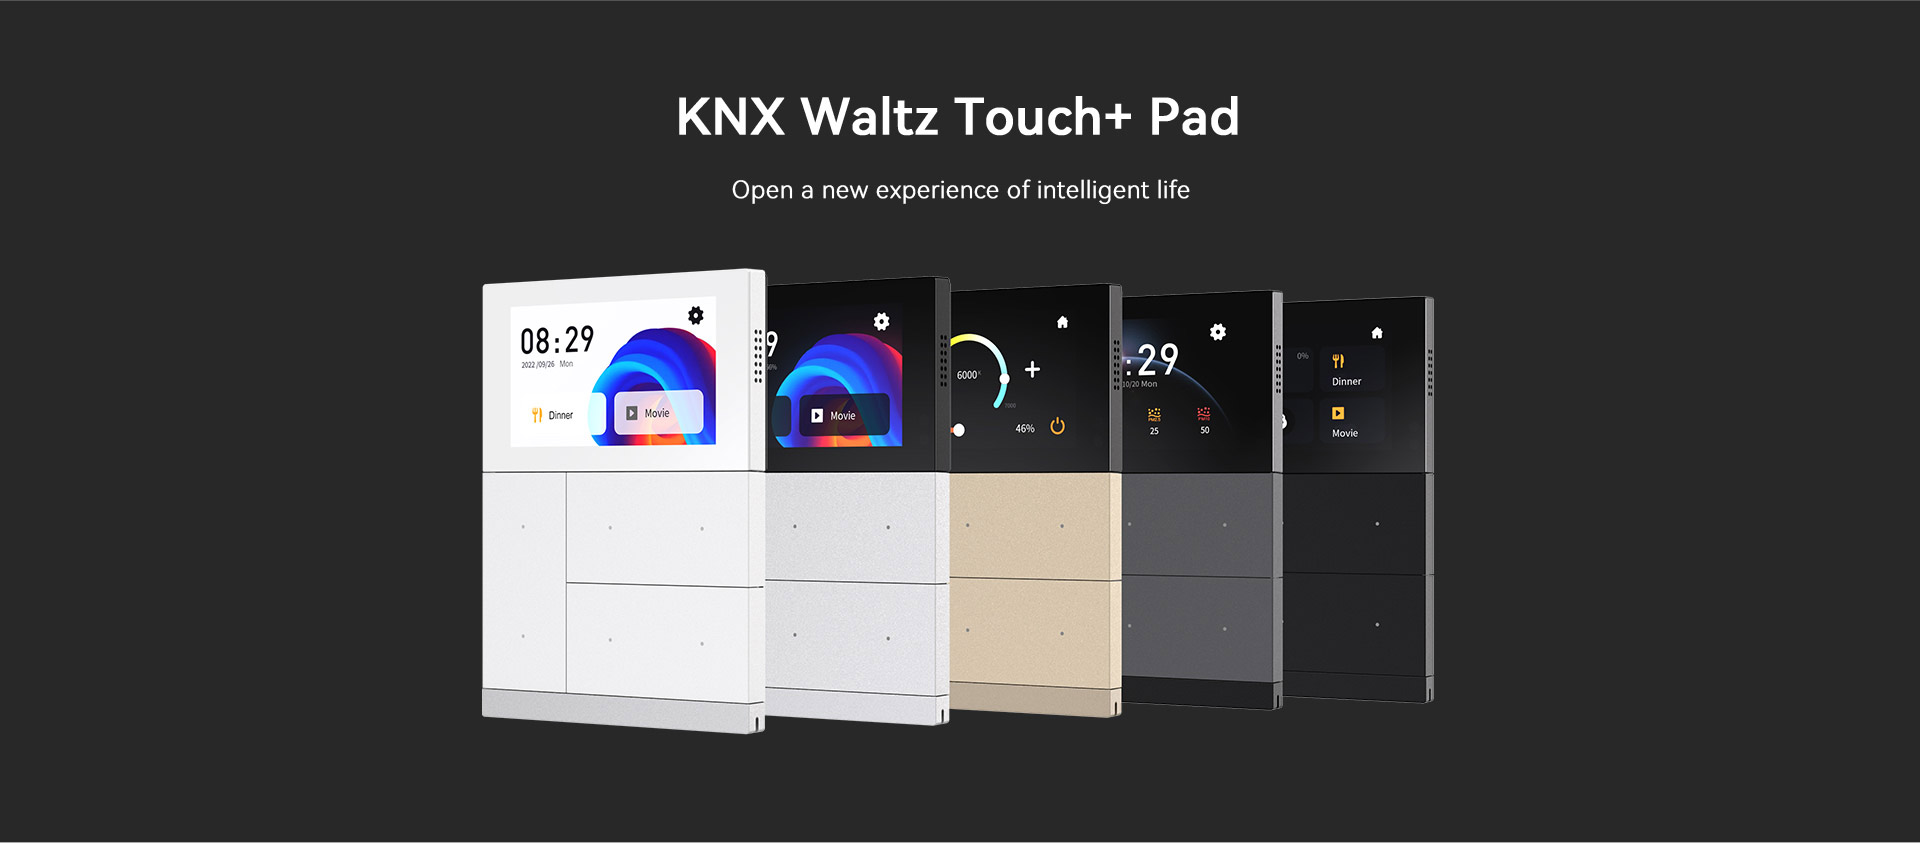 KNX Waltz Touch+ Pad